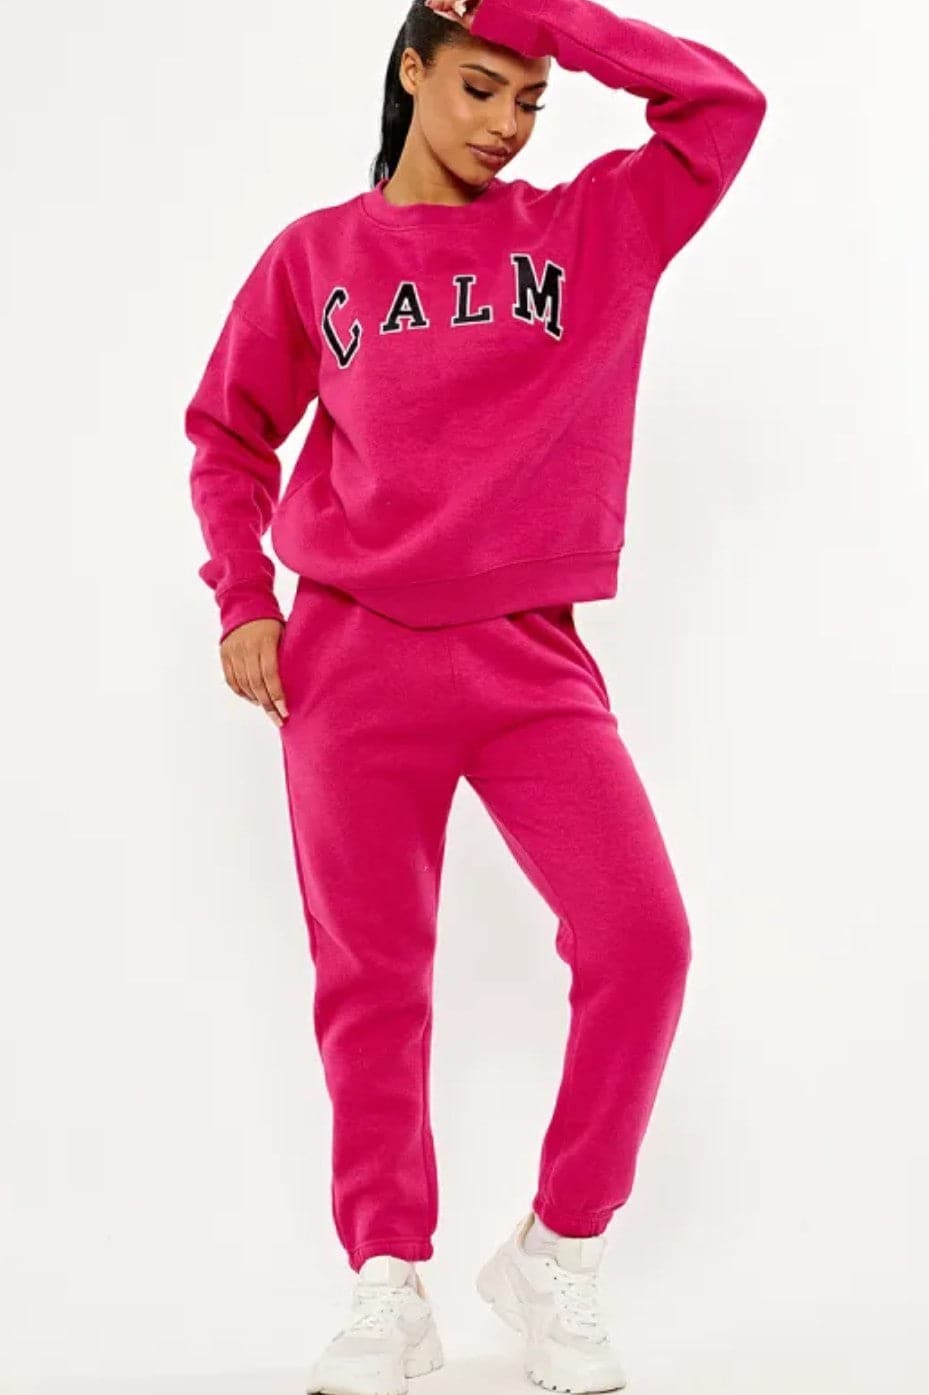 Embroidered Calm Logo Crew Neck Fleece Sweatshirt & Jogger Loungewear Set - Premium Loungewear Sets from justgal - Just £26.99! Shop now at justgal